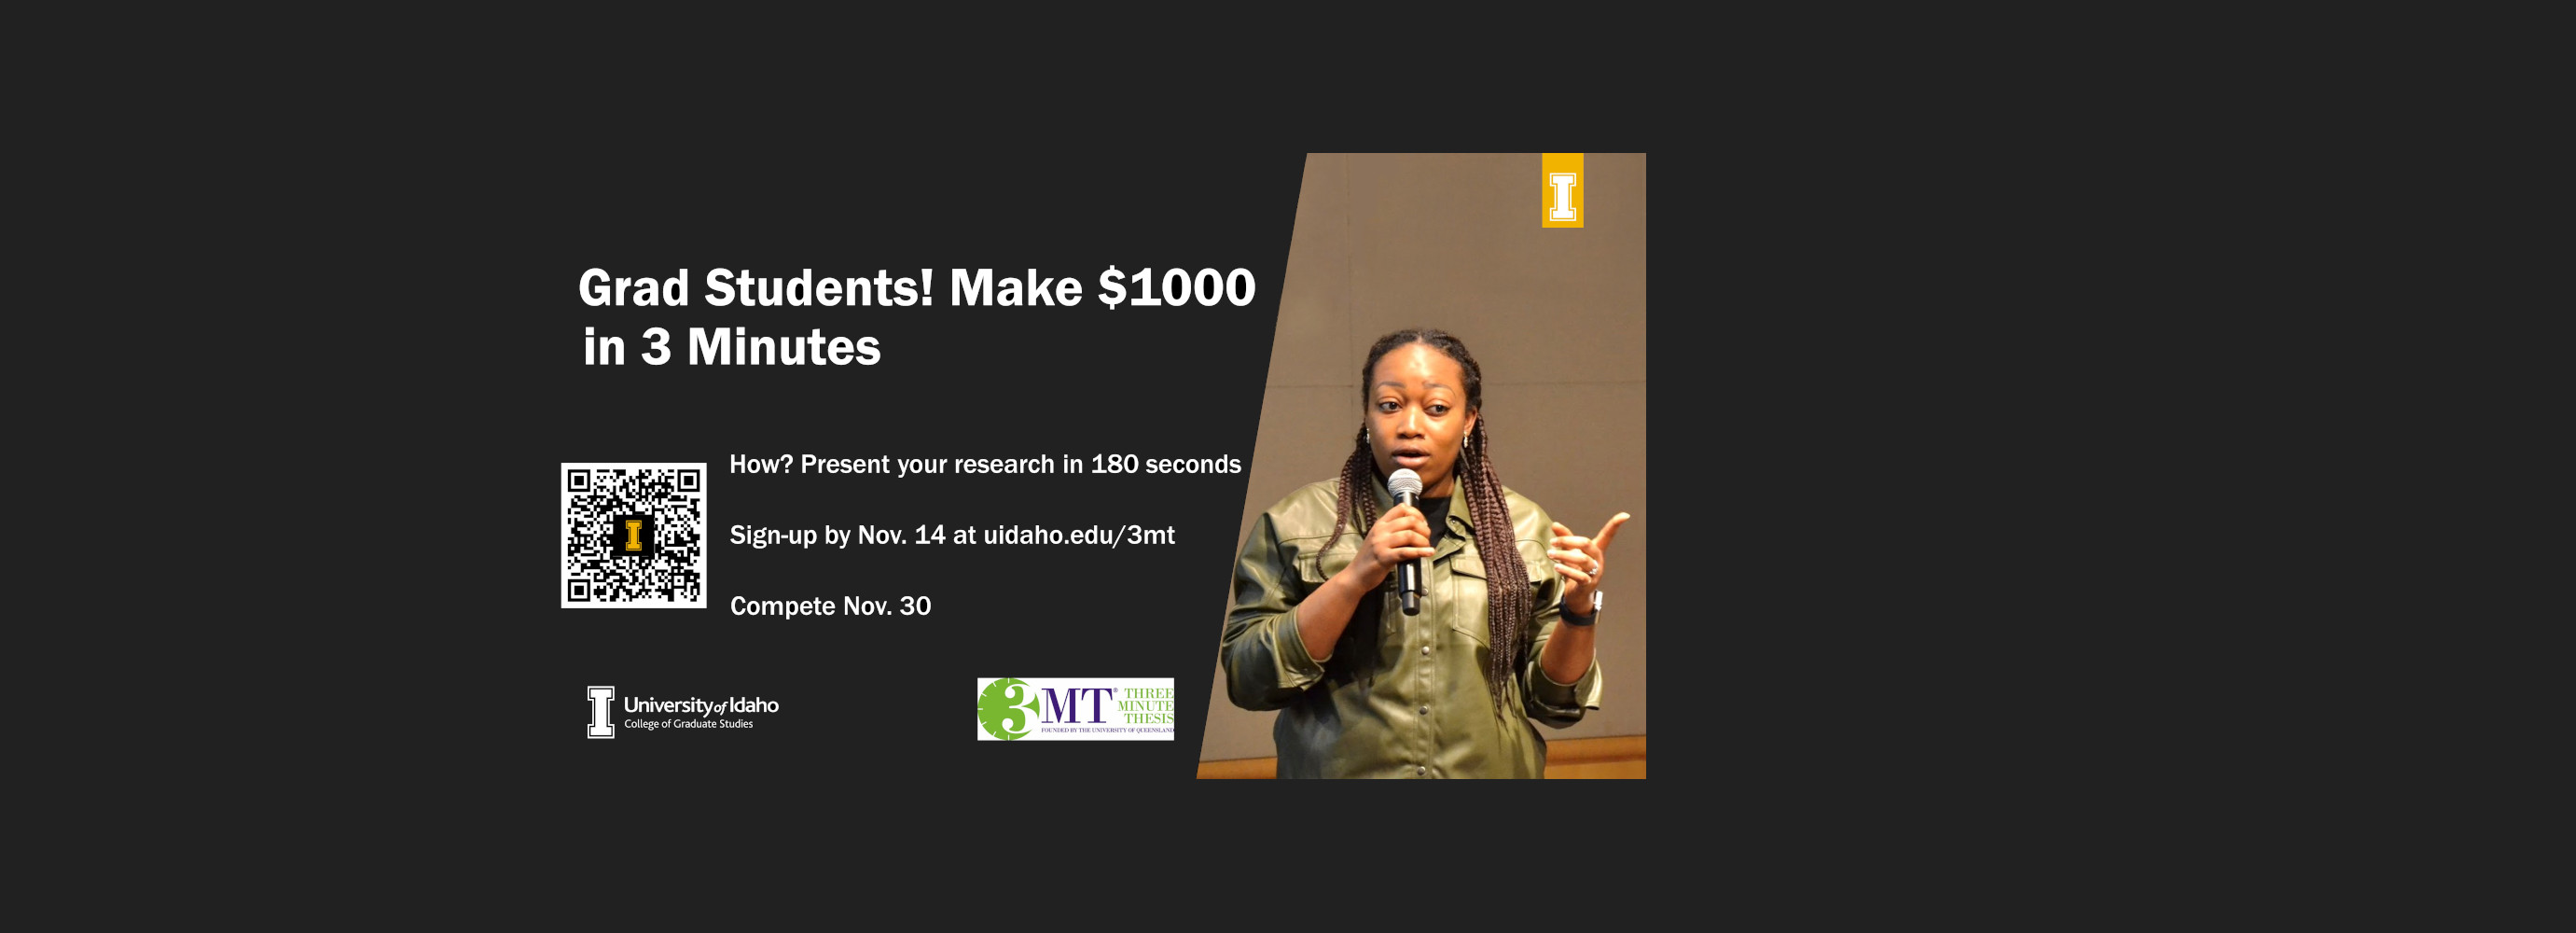 Grad Students! Make 1000 dollars in 3 minutes. visit uidaho.edu/3mt for more details